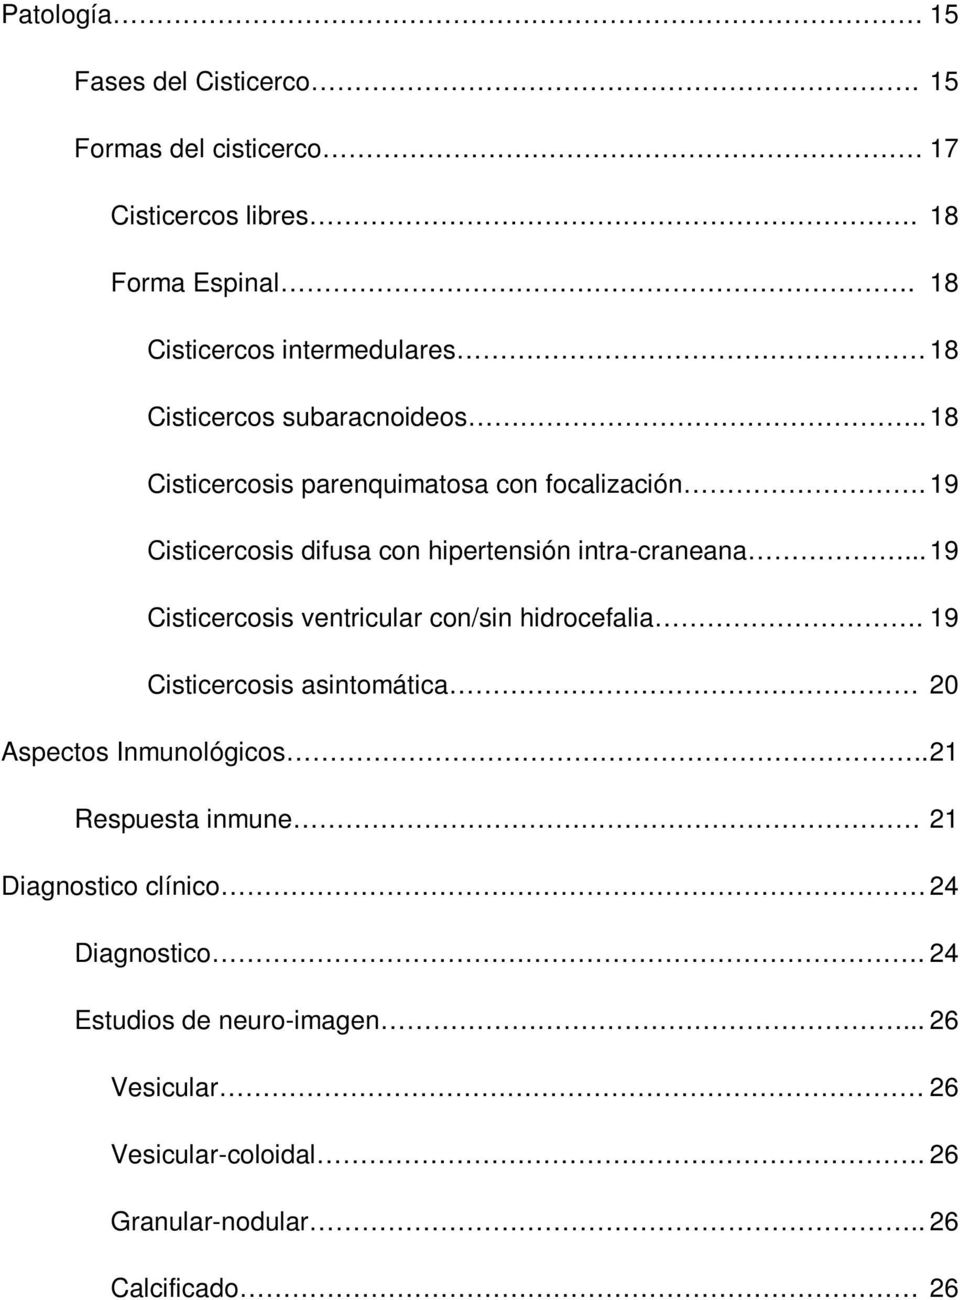 19 Cisticercosis difusa con hipertensión intra-craneana... 19 Cisticercosis ventricular con/sin hidrocefalia.